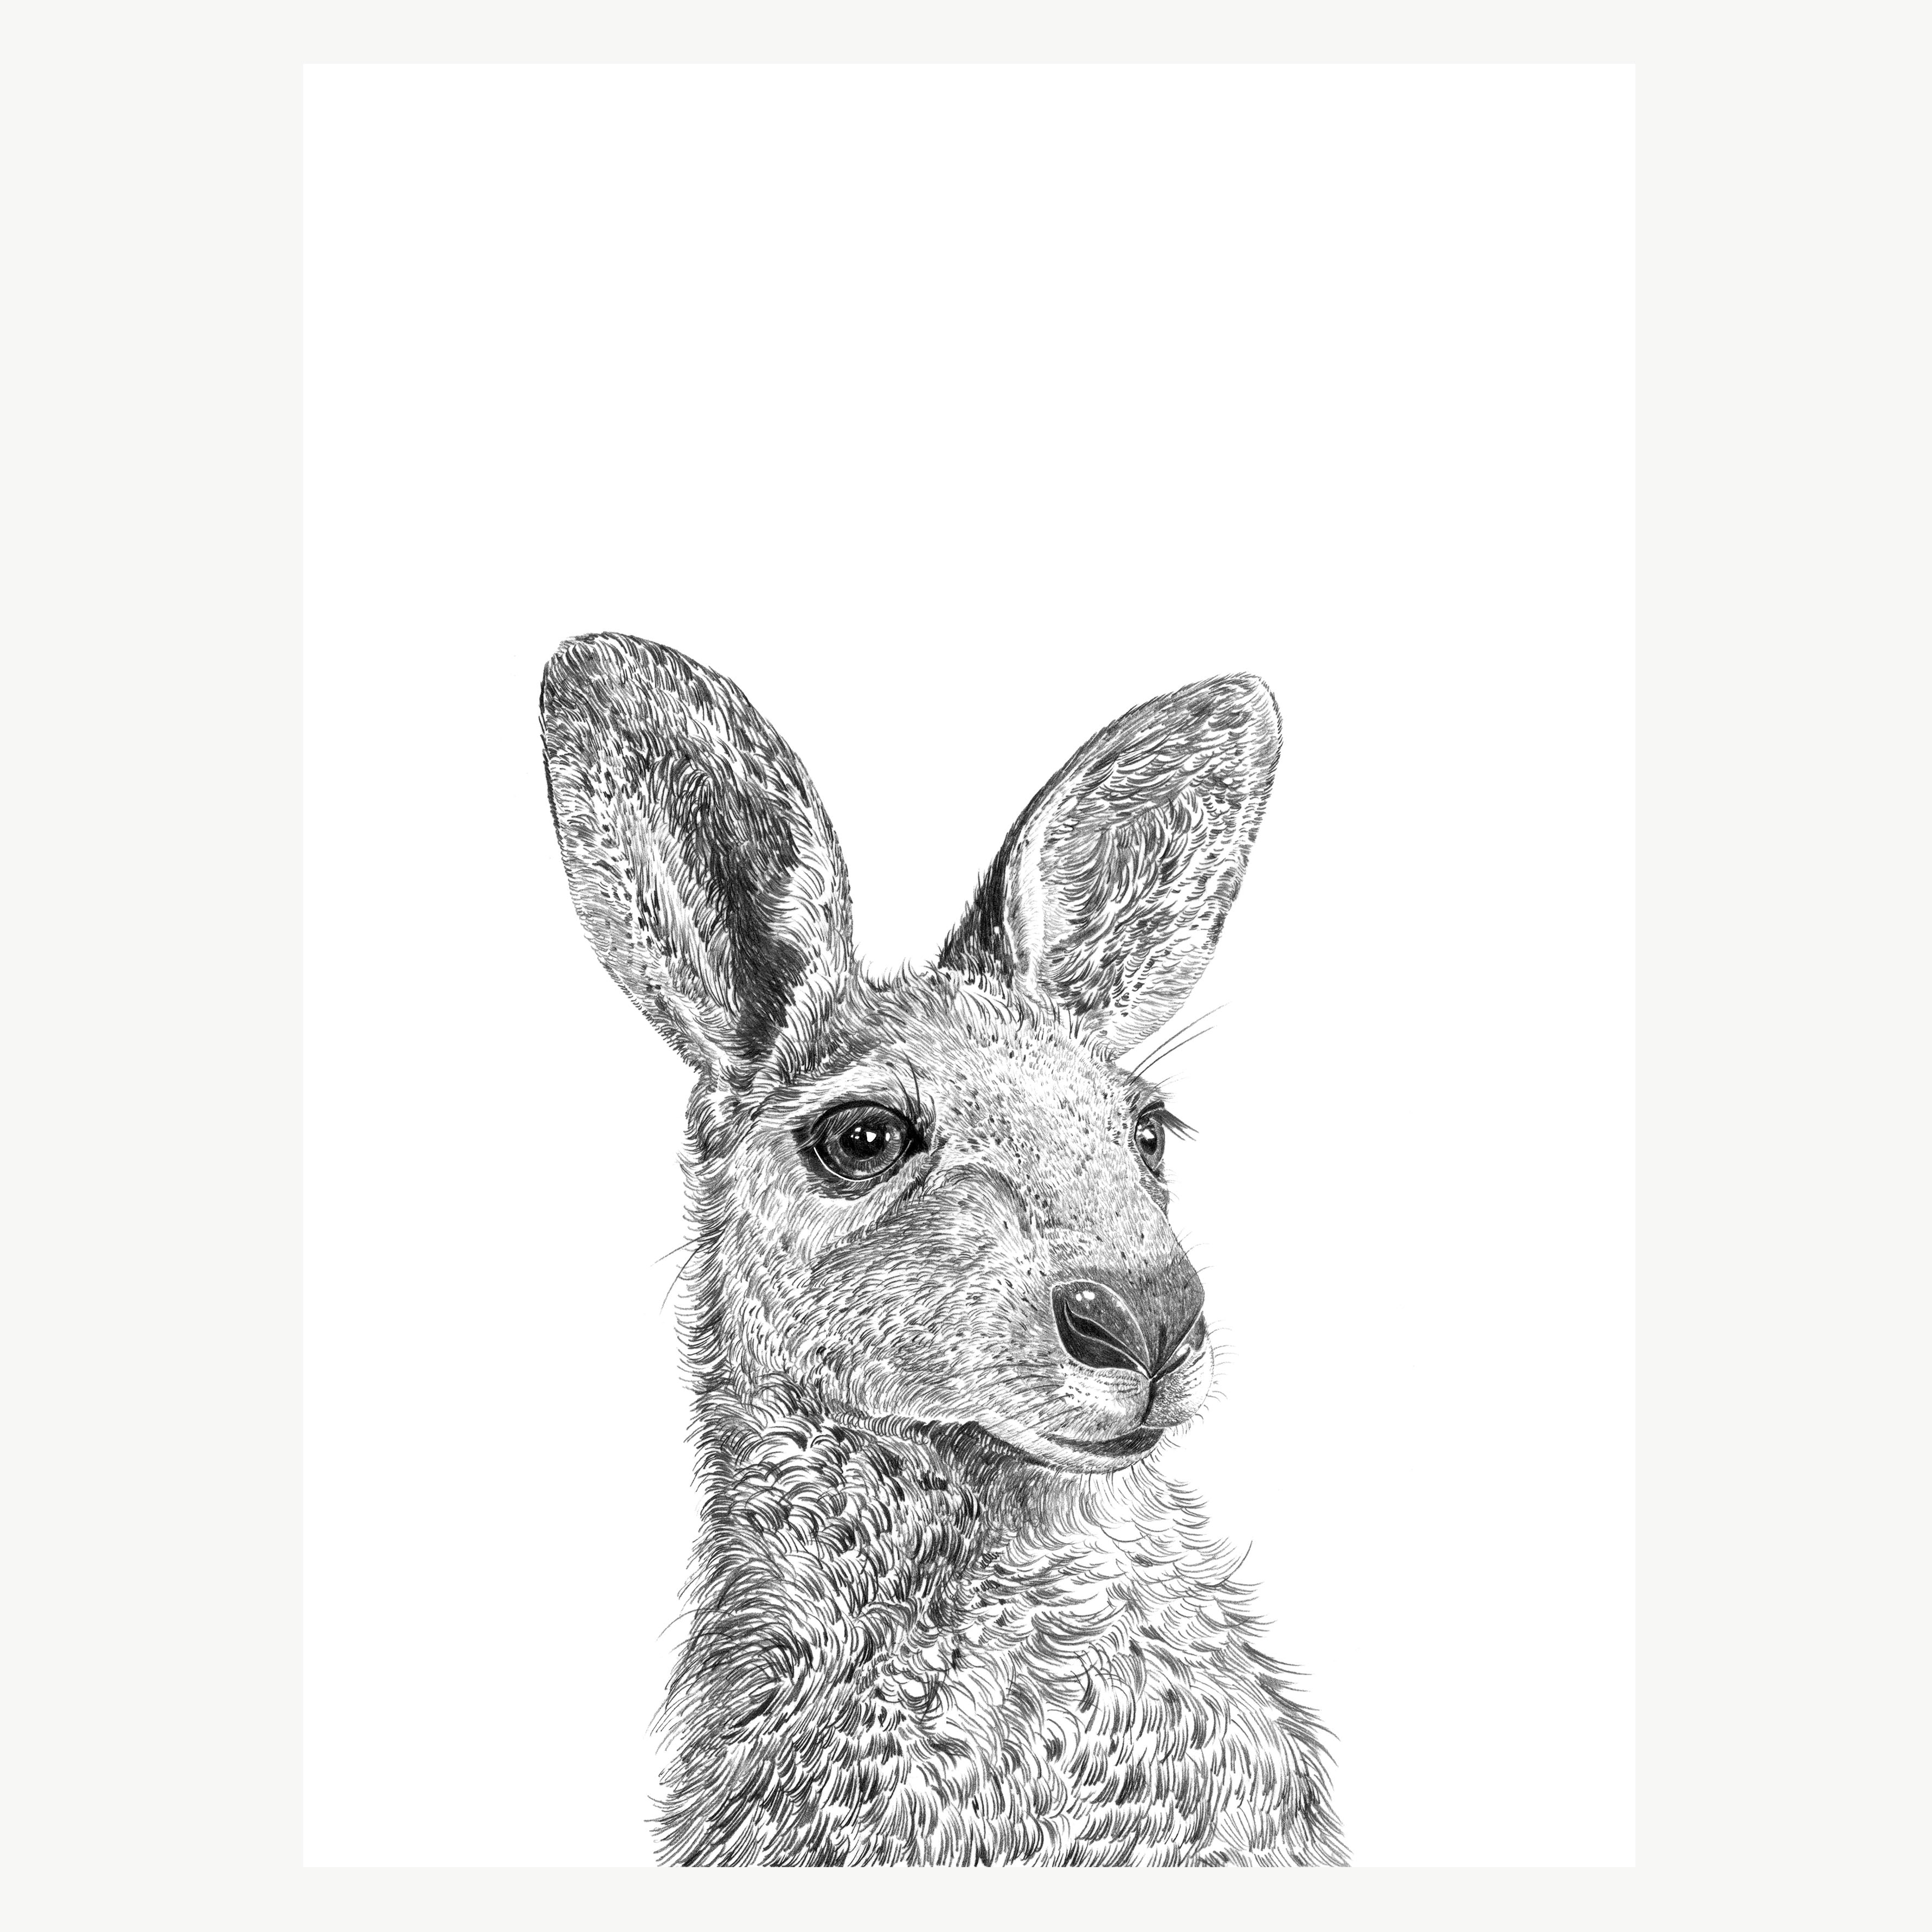 Kangaroo Print